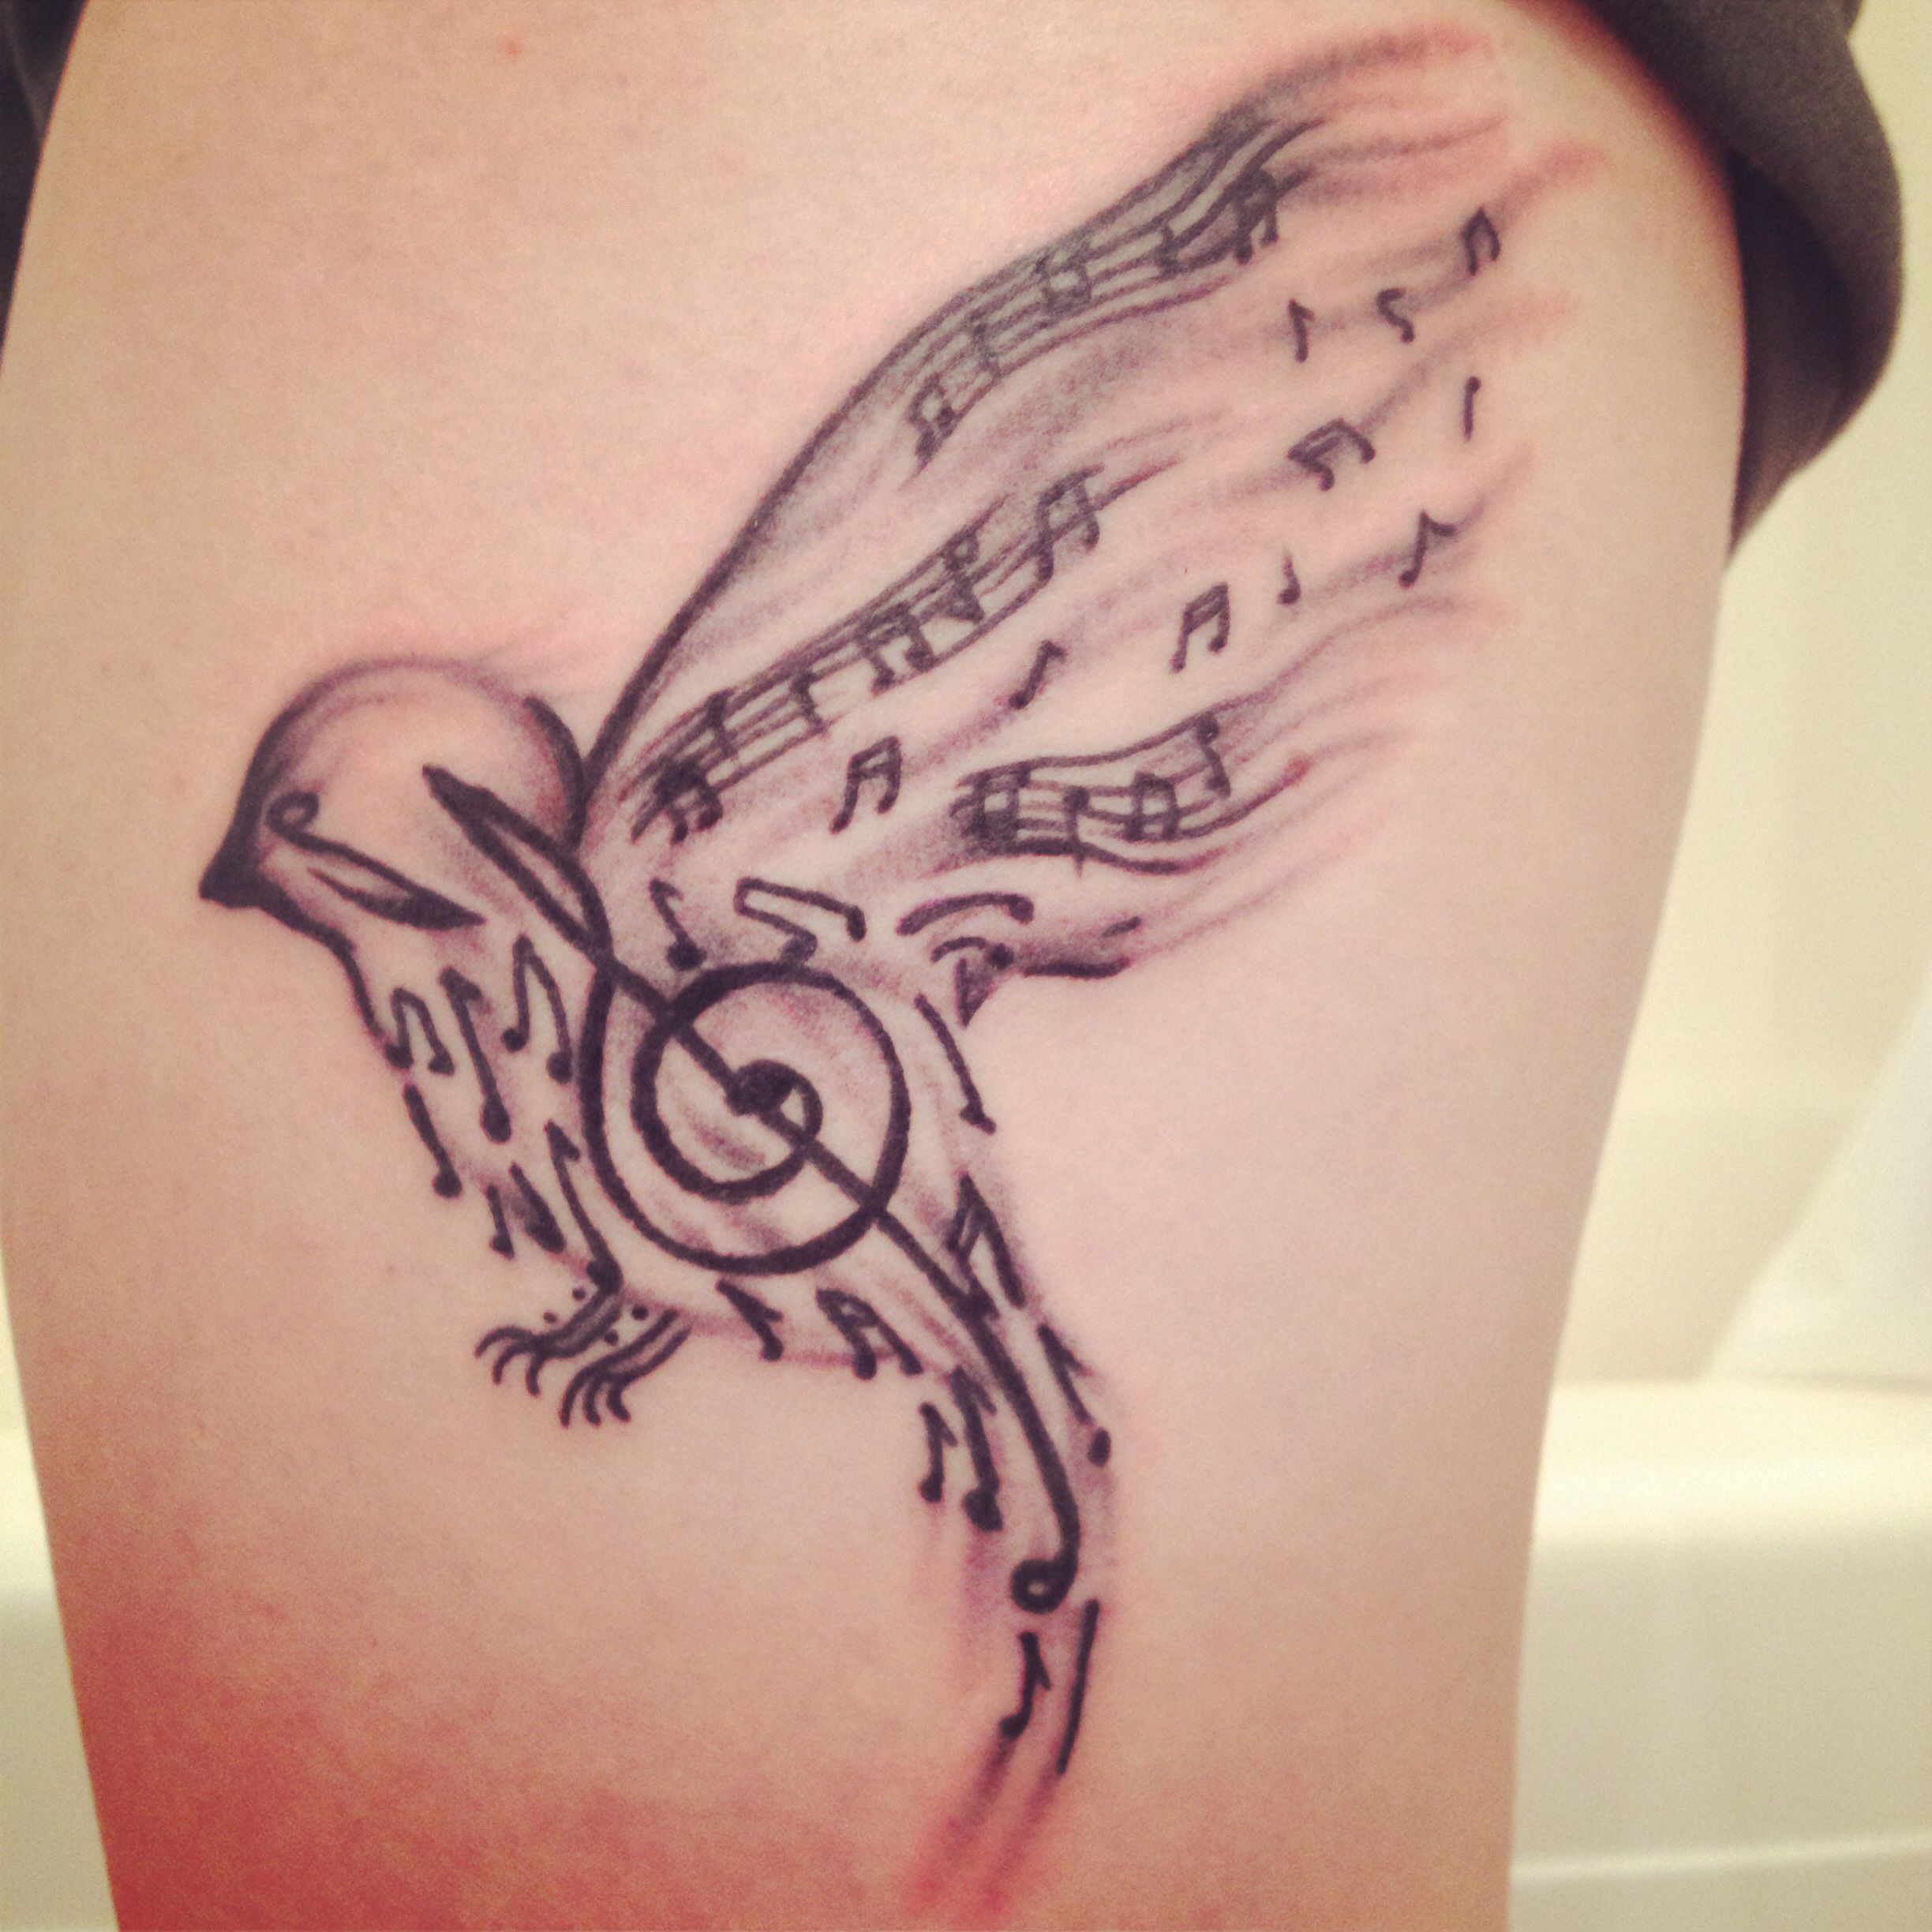 My Musical Bird Tattoo That I Samantha Got October 2013 Tattoos throughout proportions 2448 X 2448